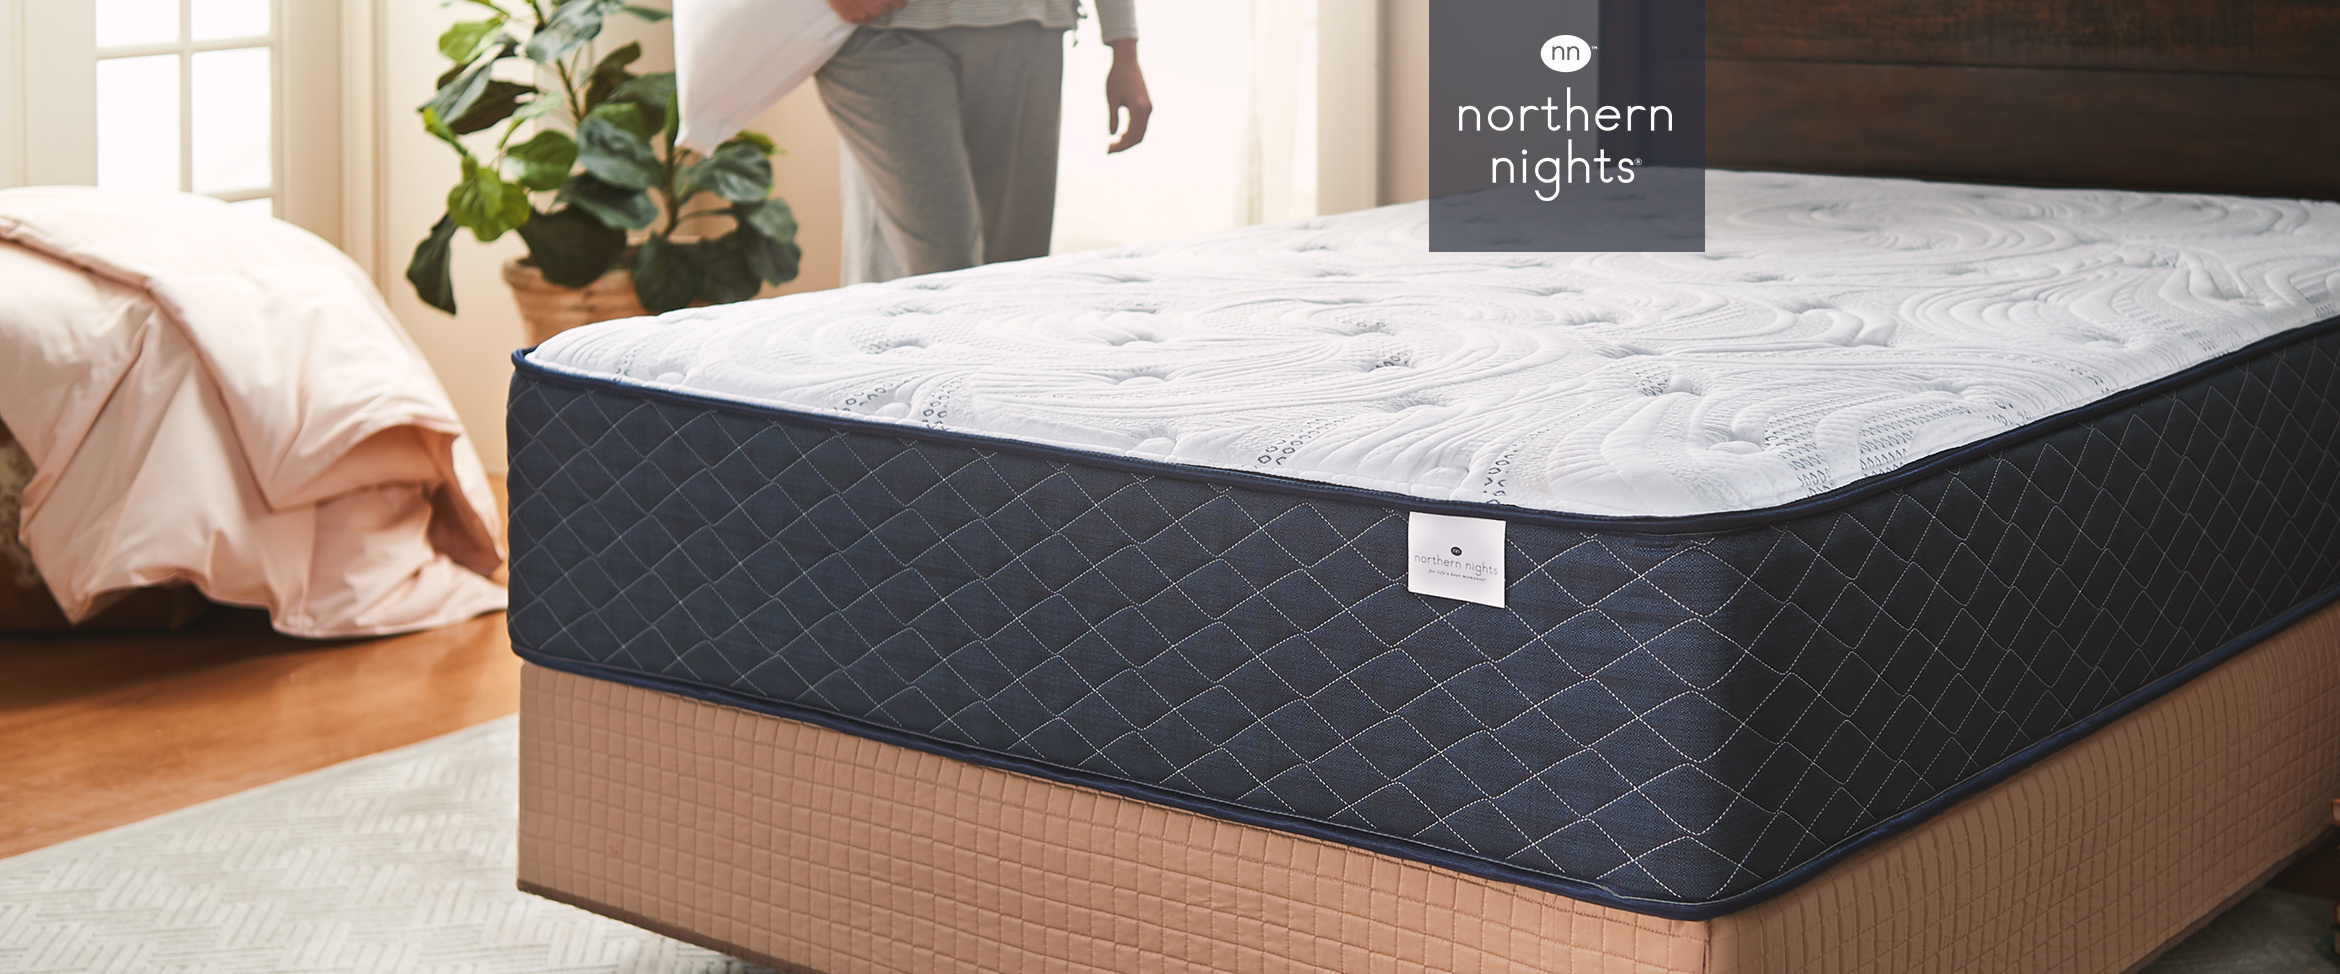 northern nights mattress pad